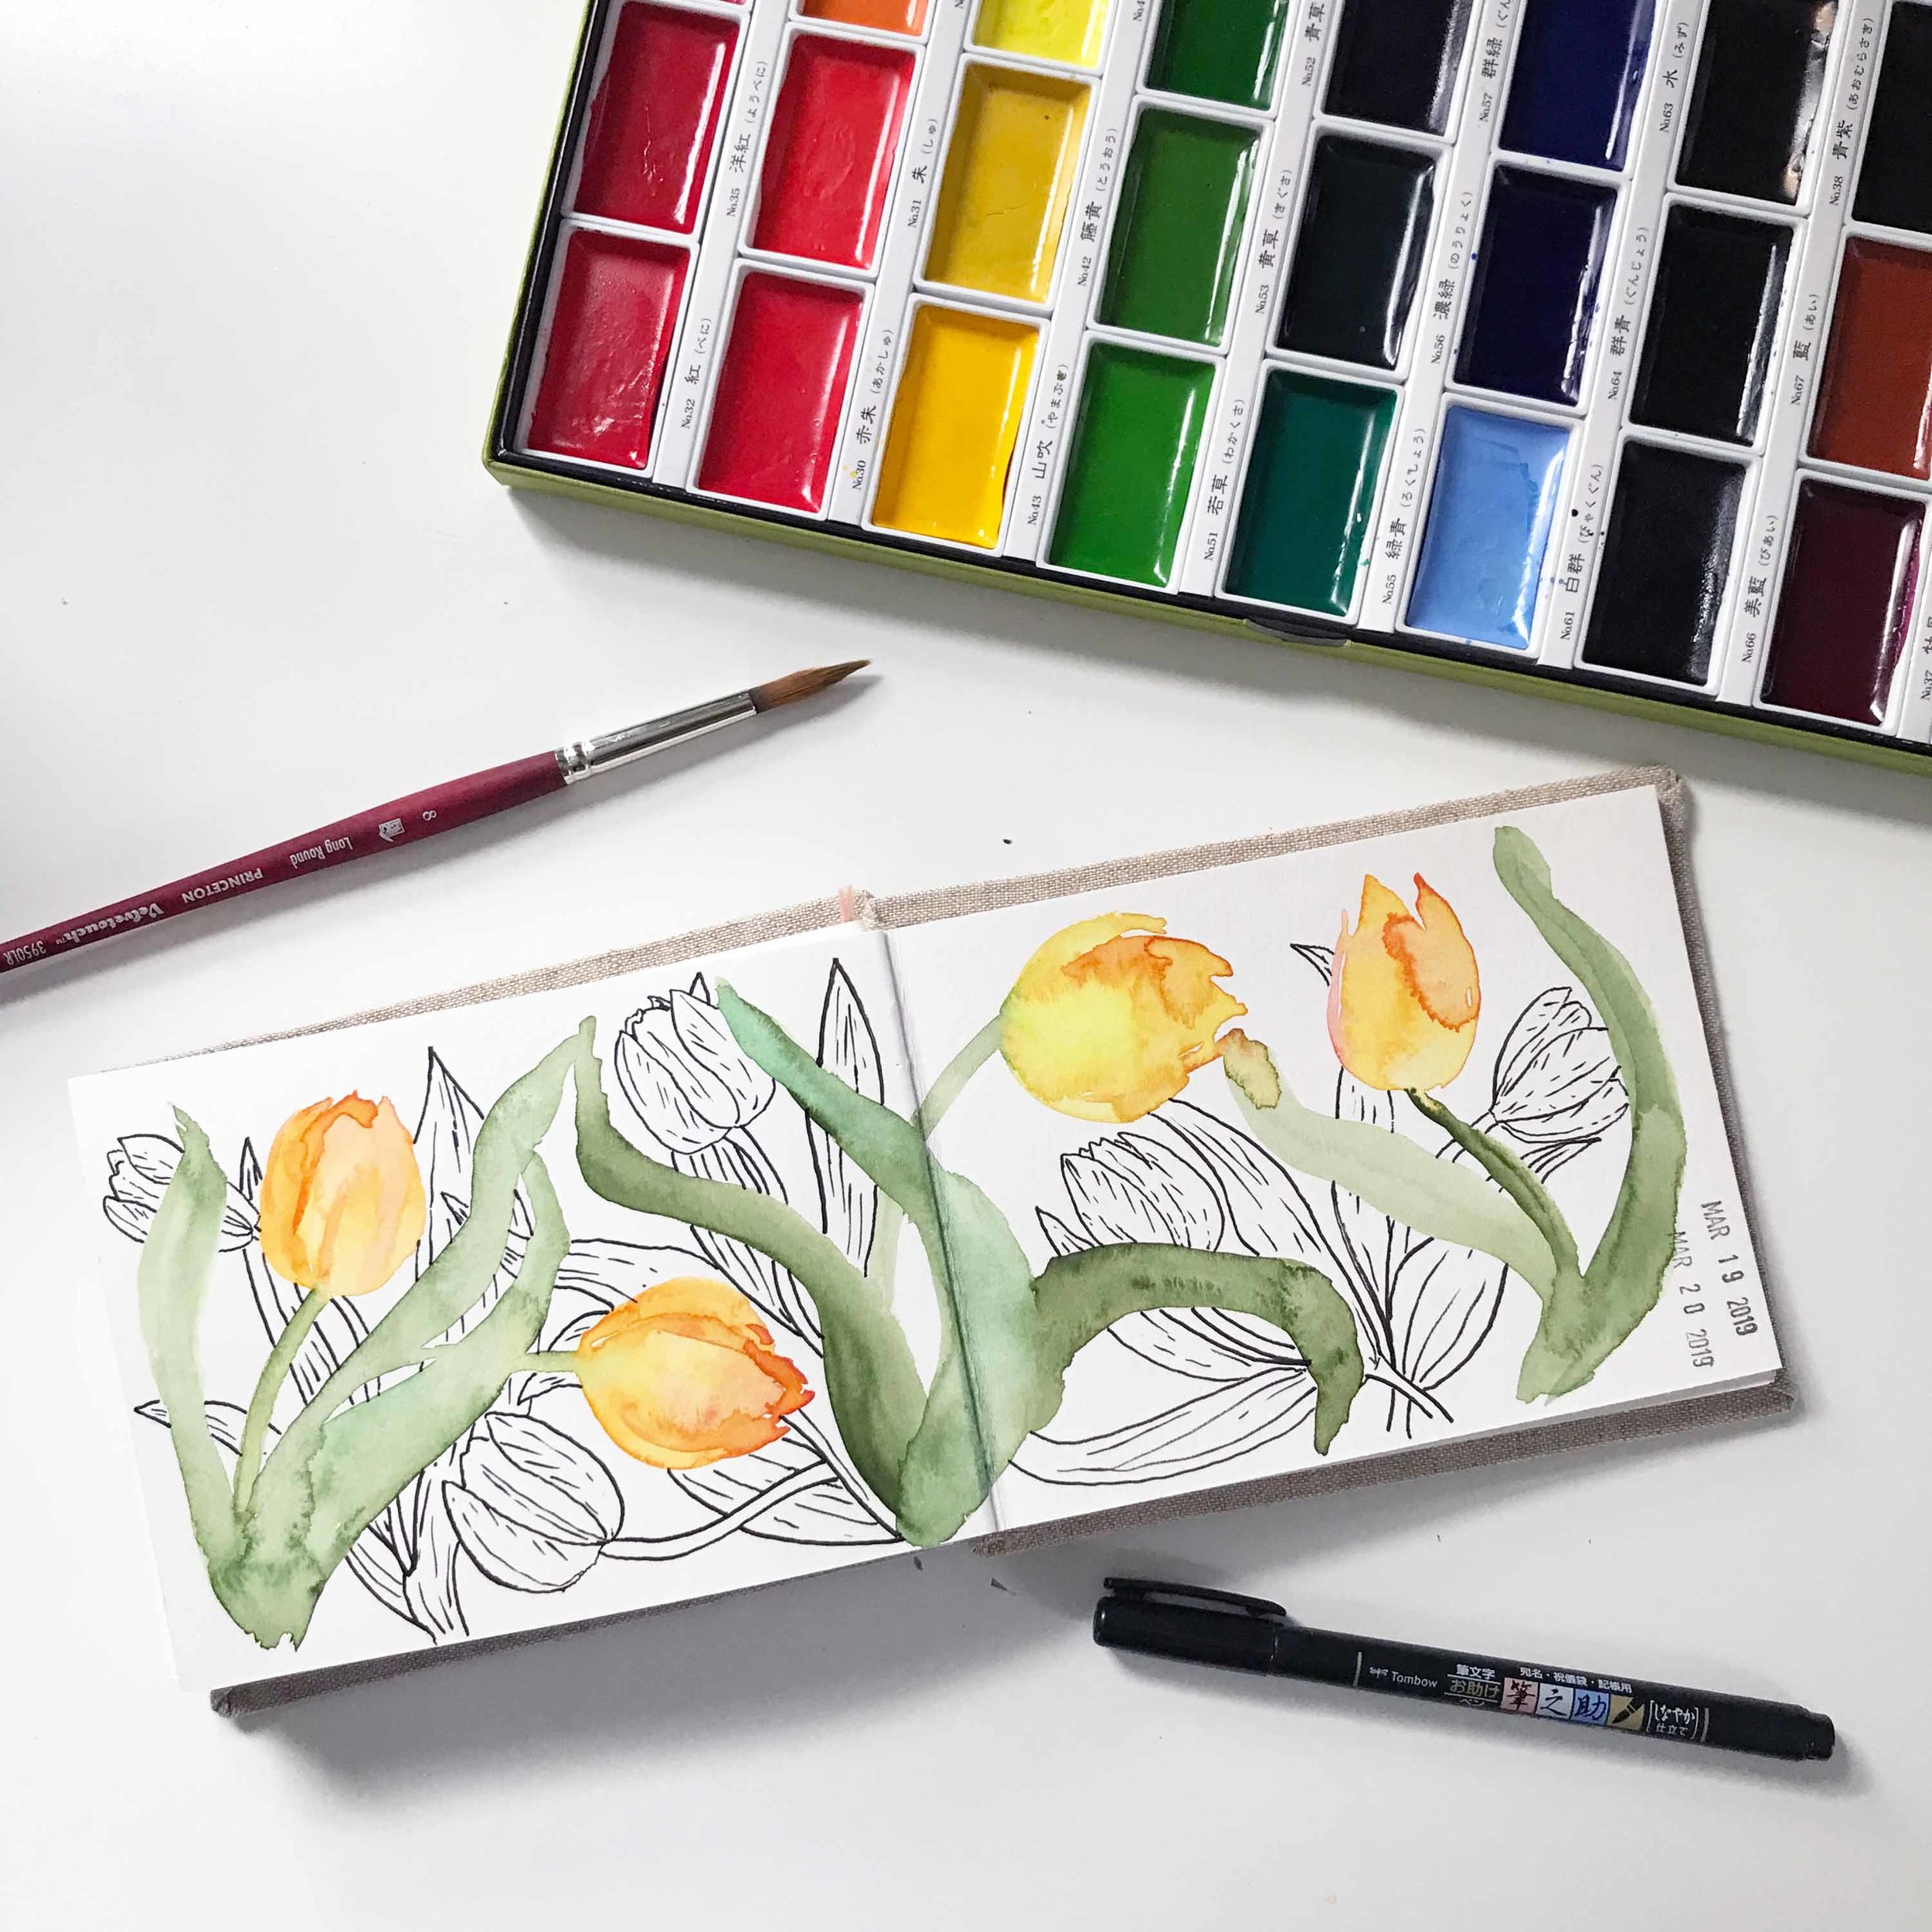 Tulips in Watercolor and Pen in Anne Butera's Sketchbook